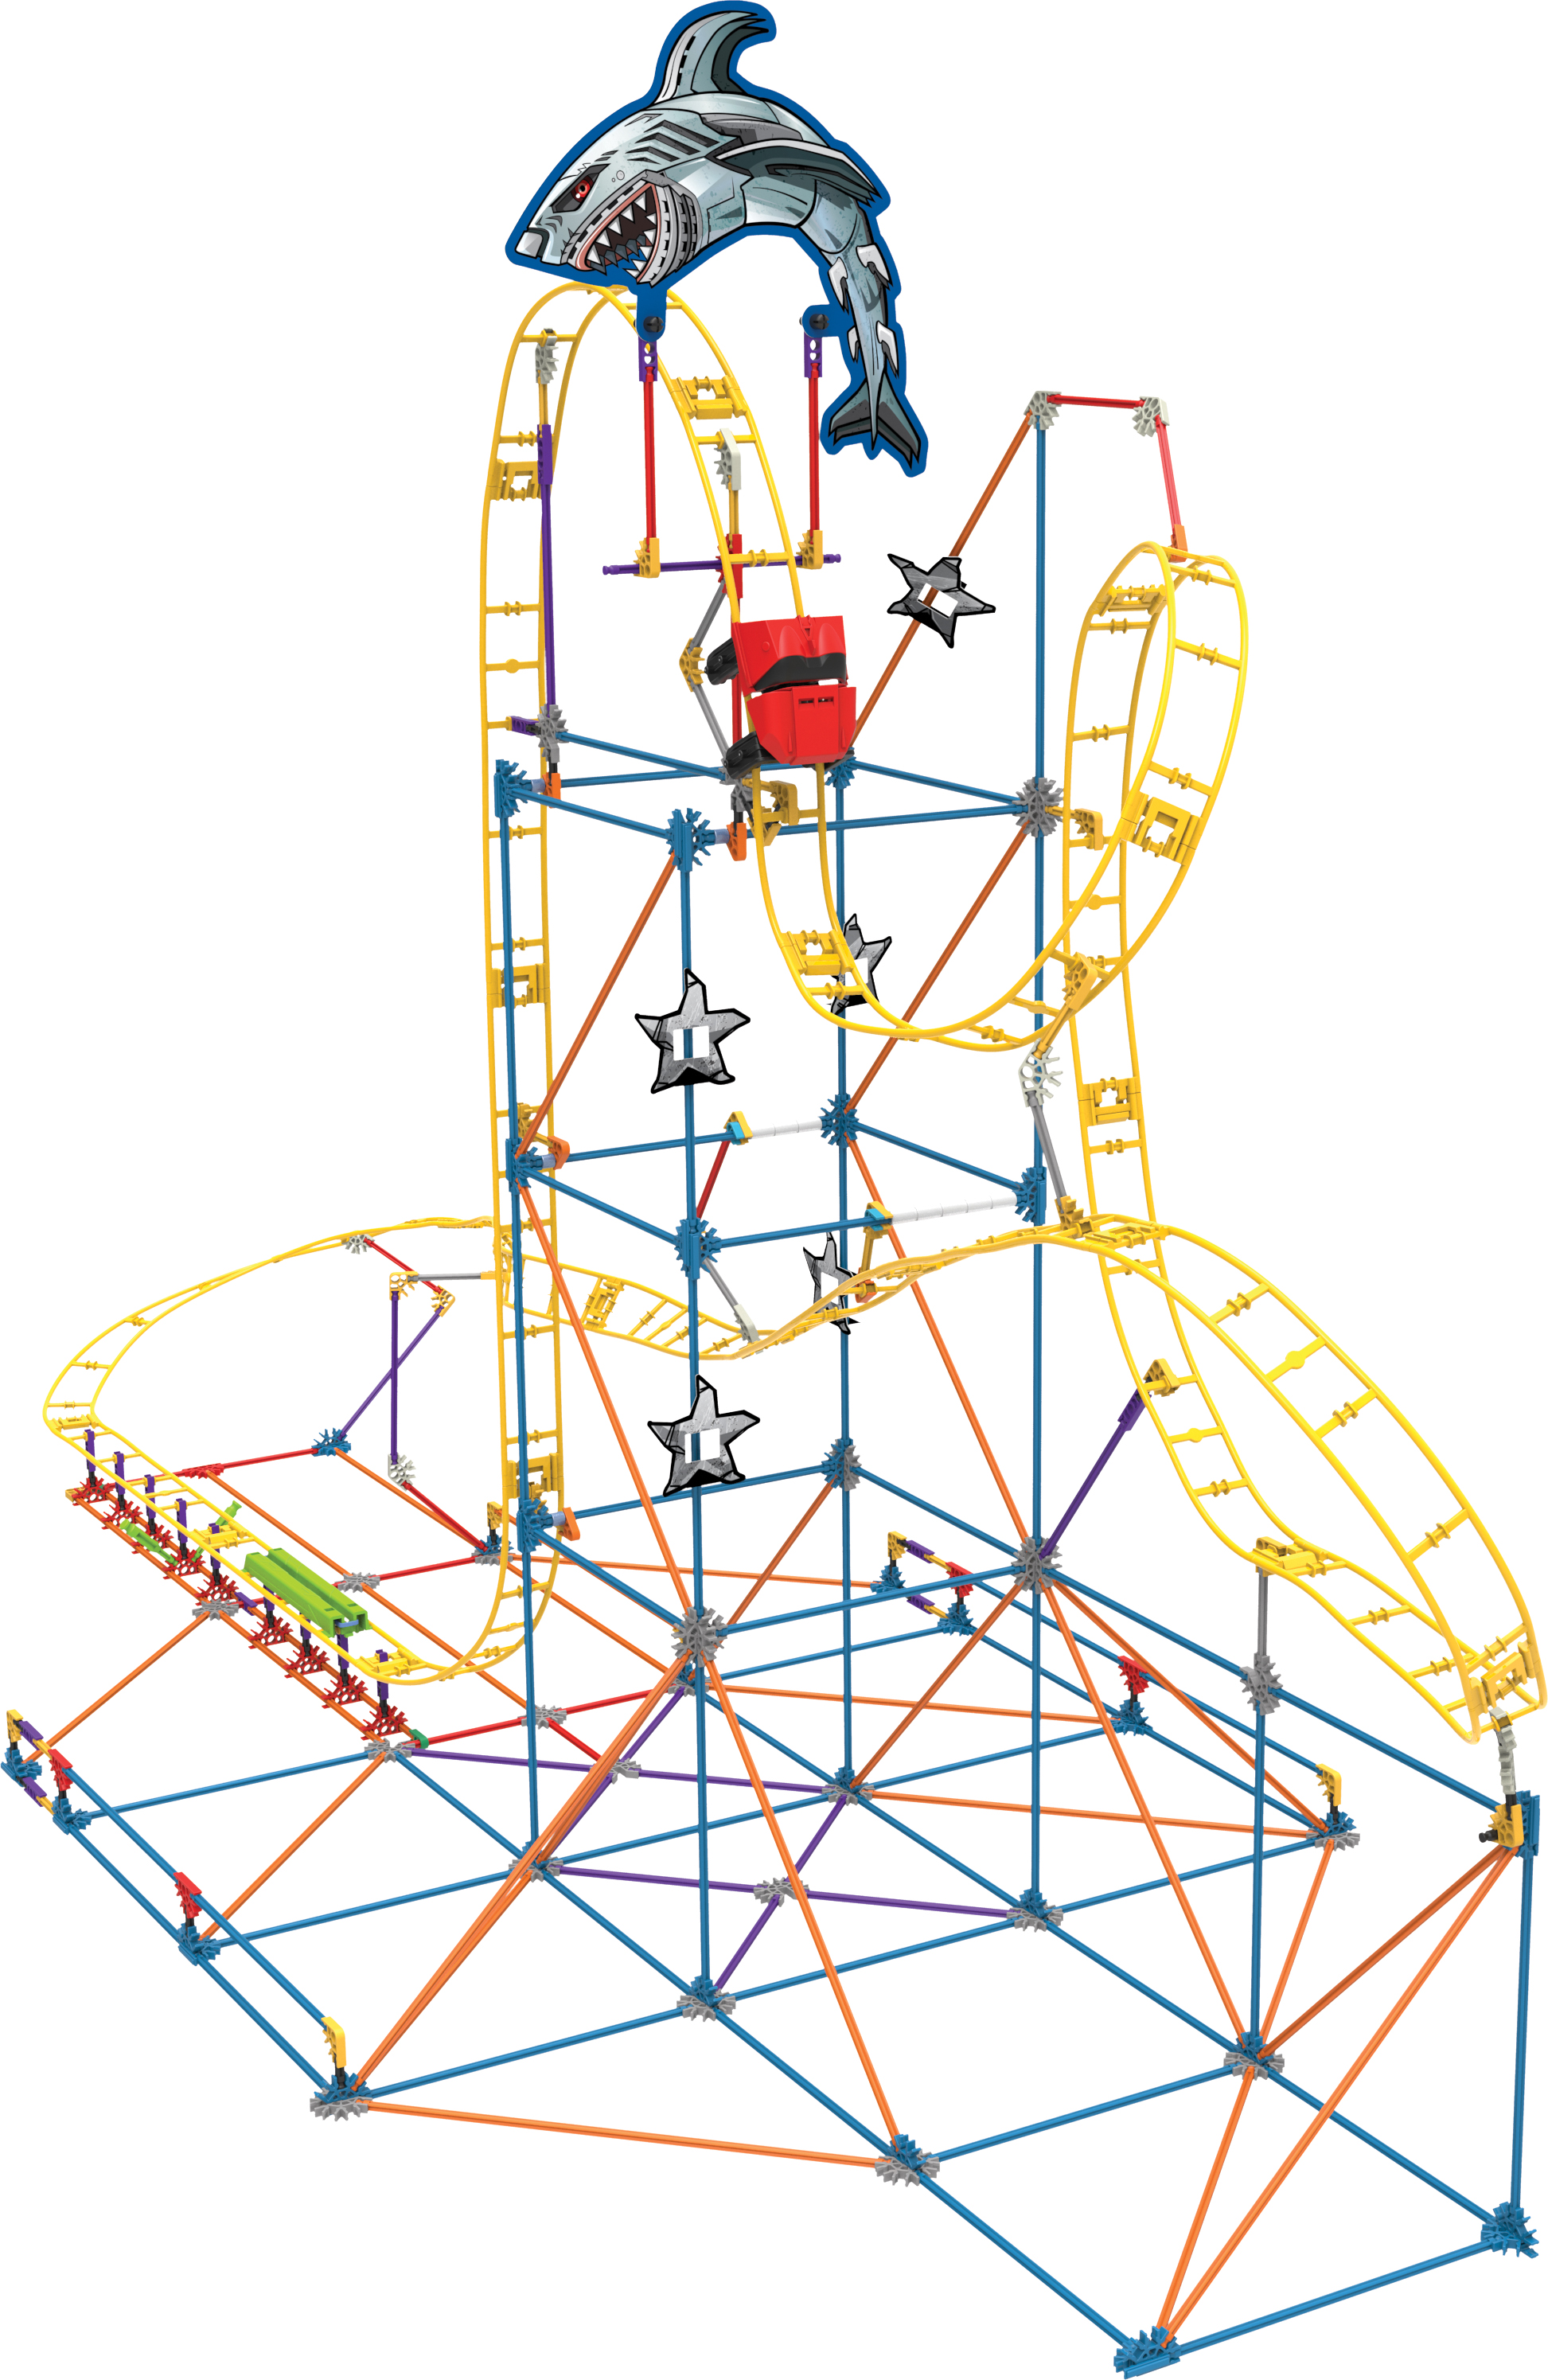 Knex Thrill Rides Mecha Bite Roller Coaster Building Set